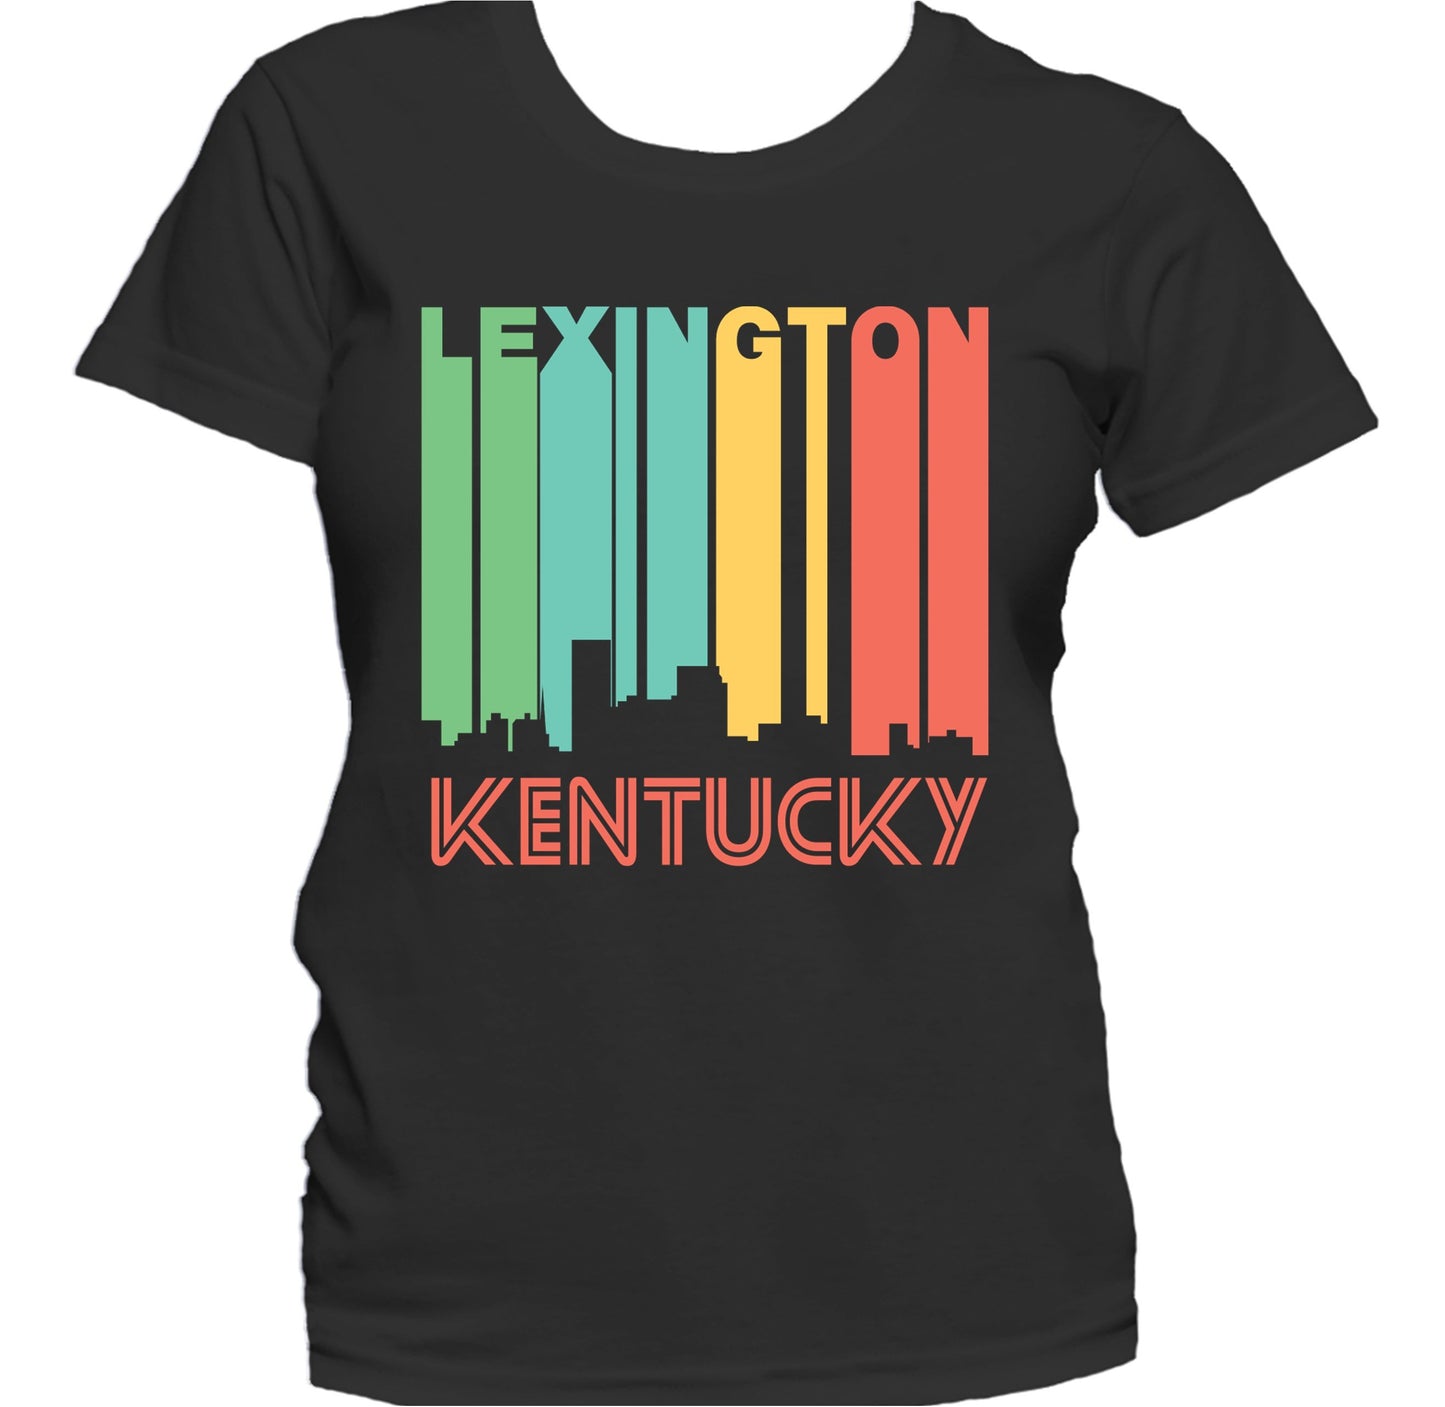 Retro 1970's Style Lexington Kentucky Skyline Women's T-Shirt